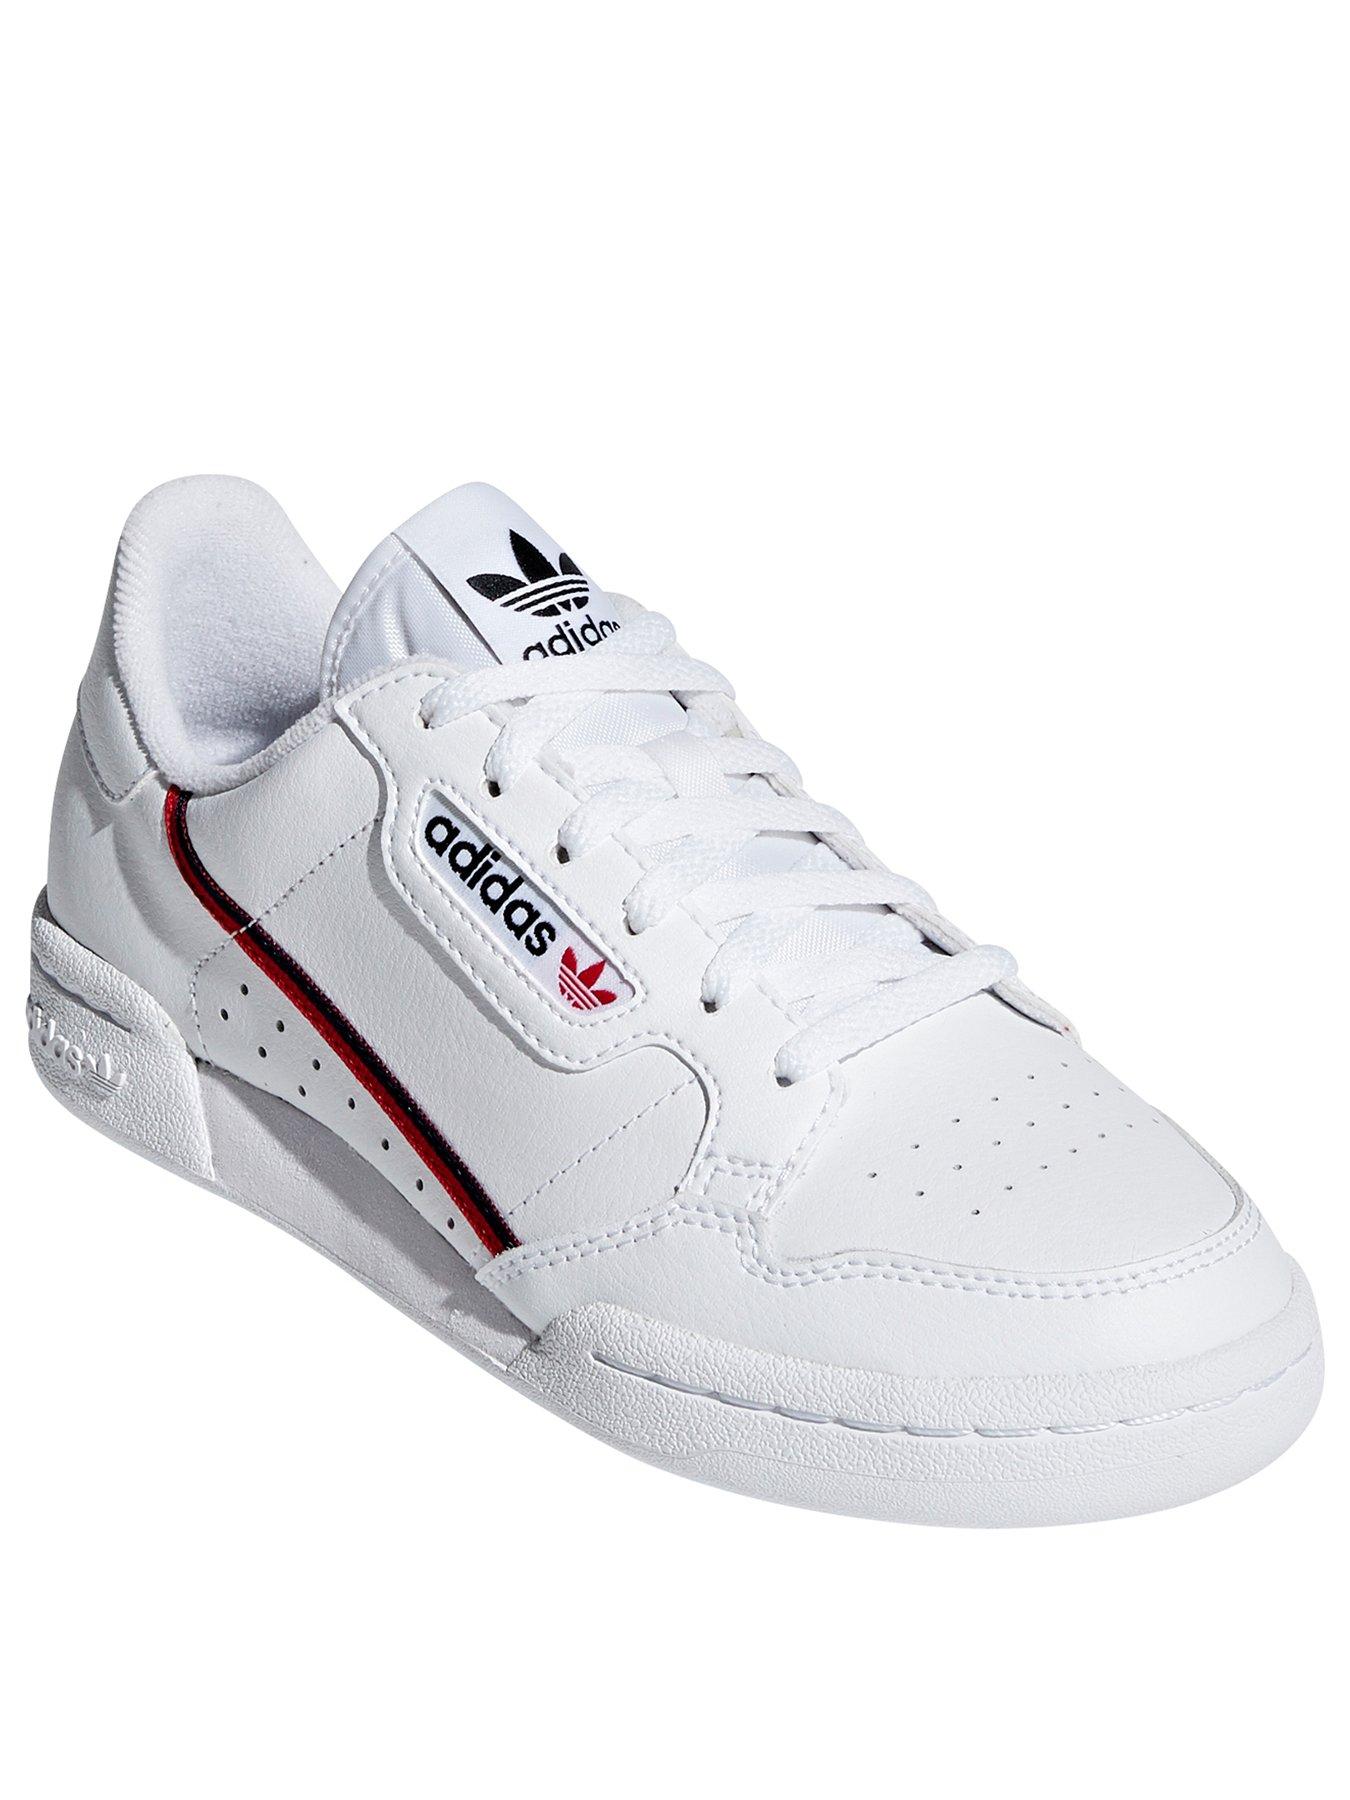 adidas trainers white